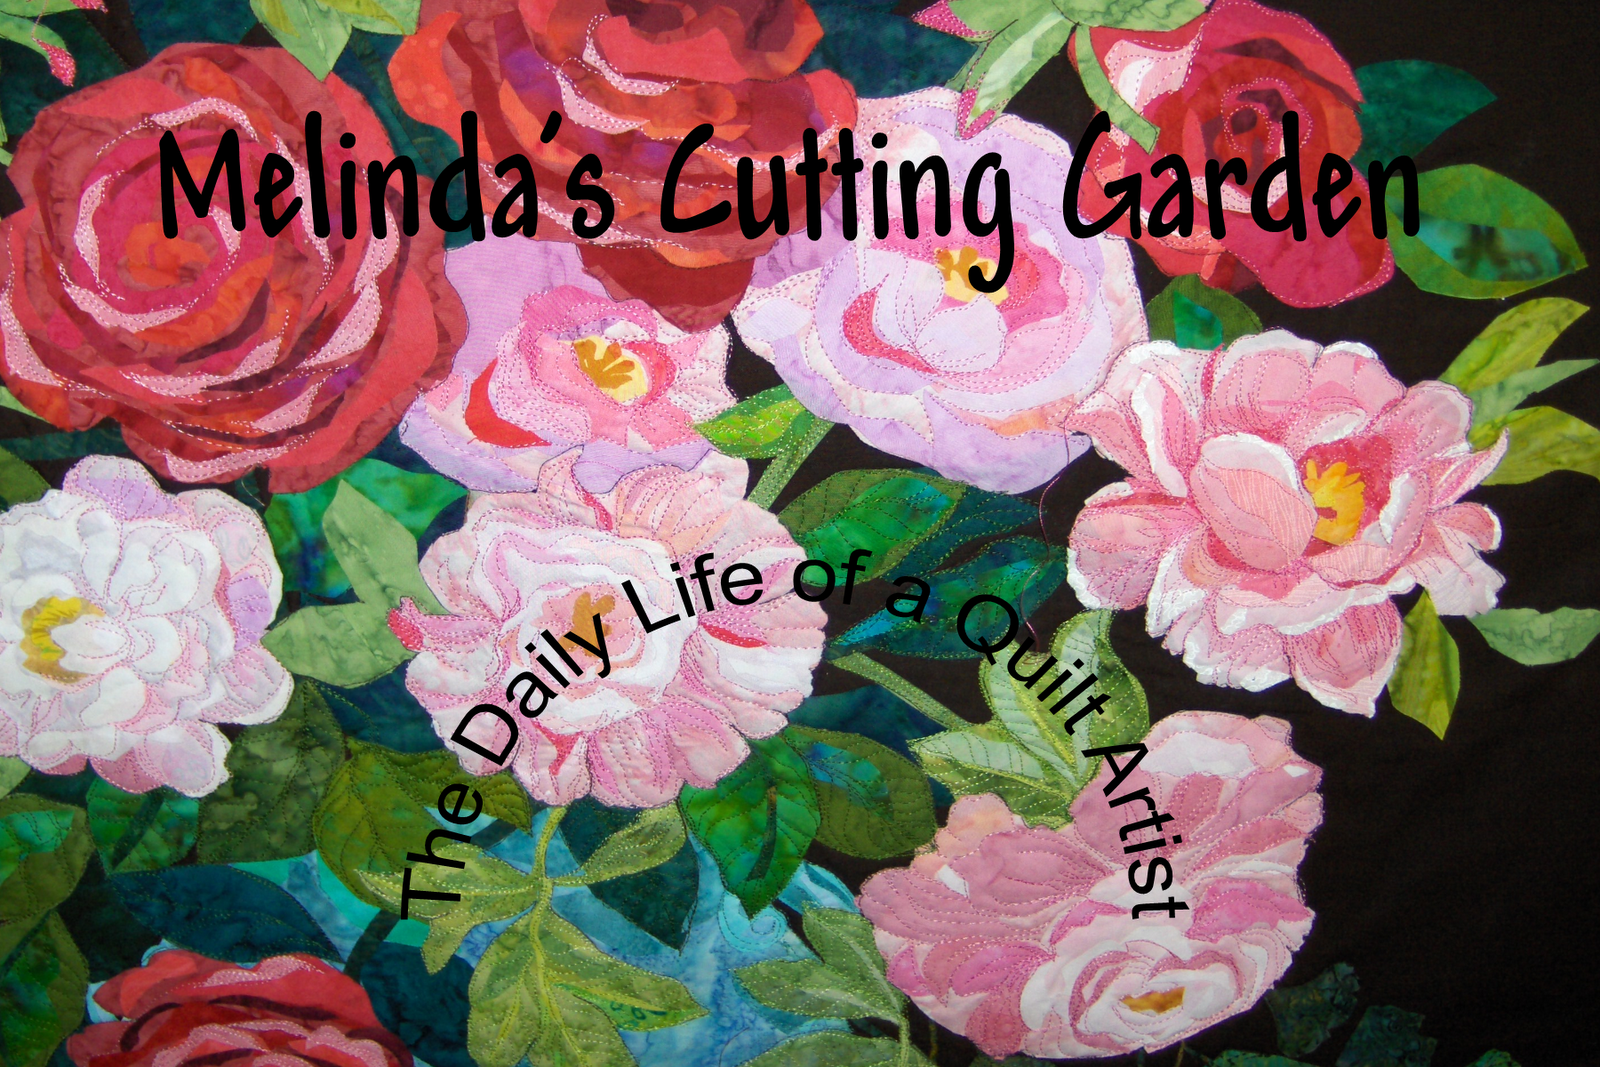 Melinda's Cutting Garden